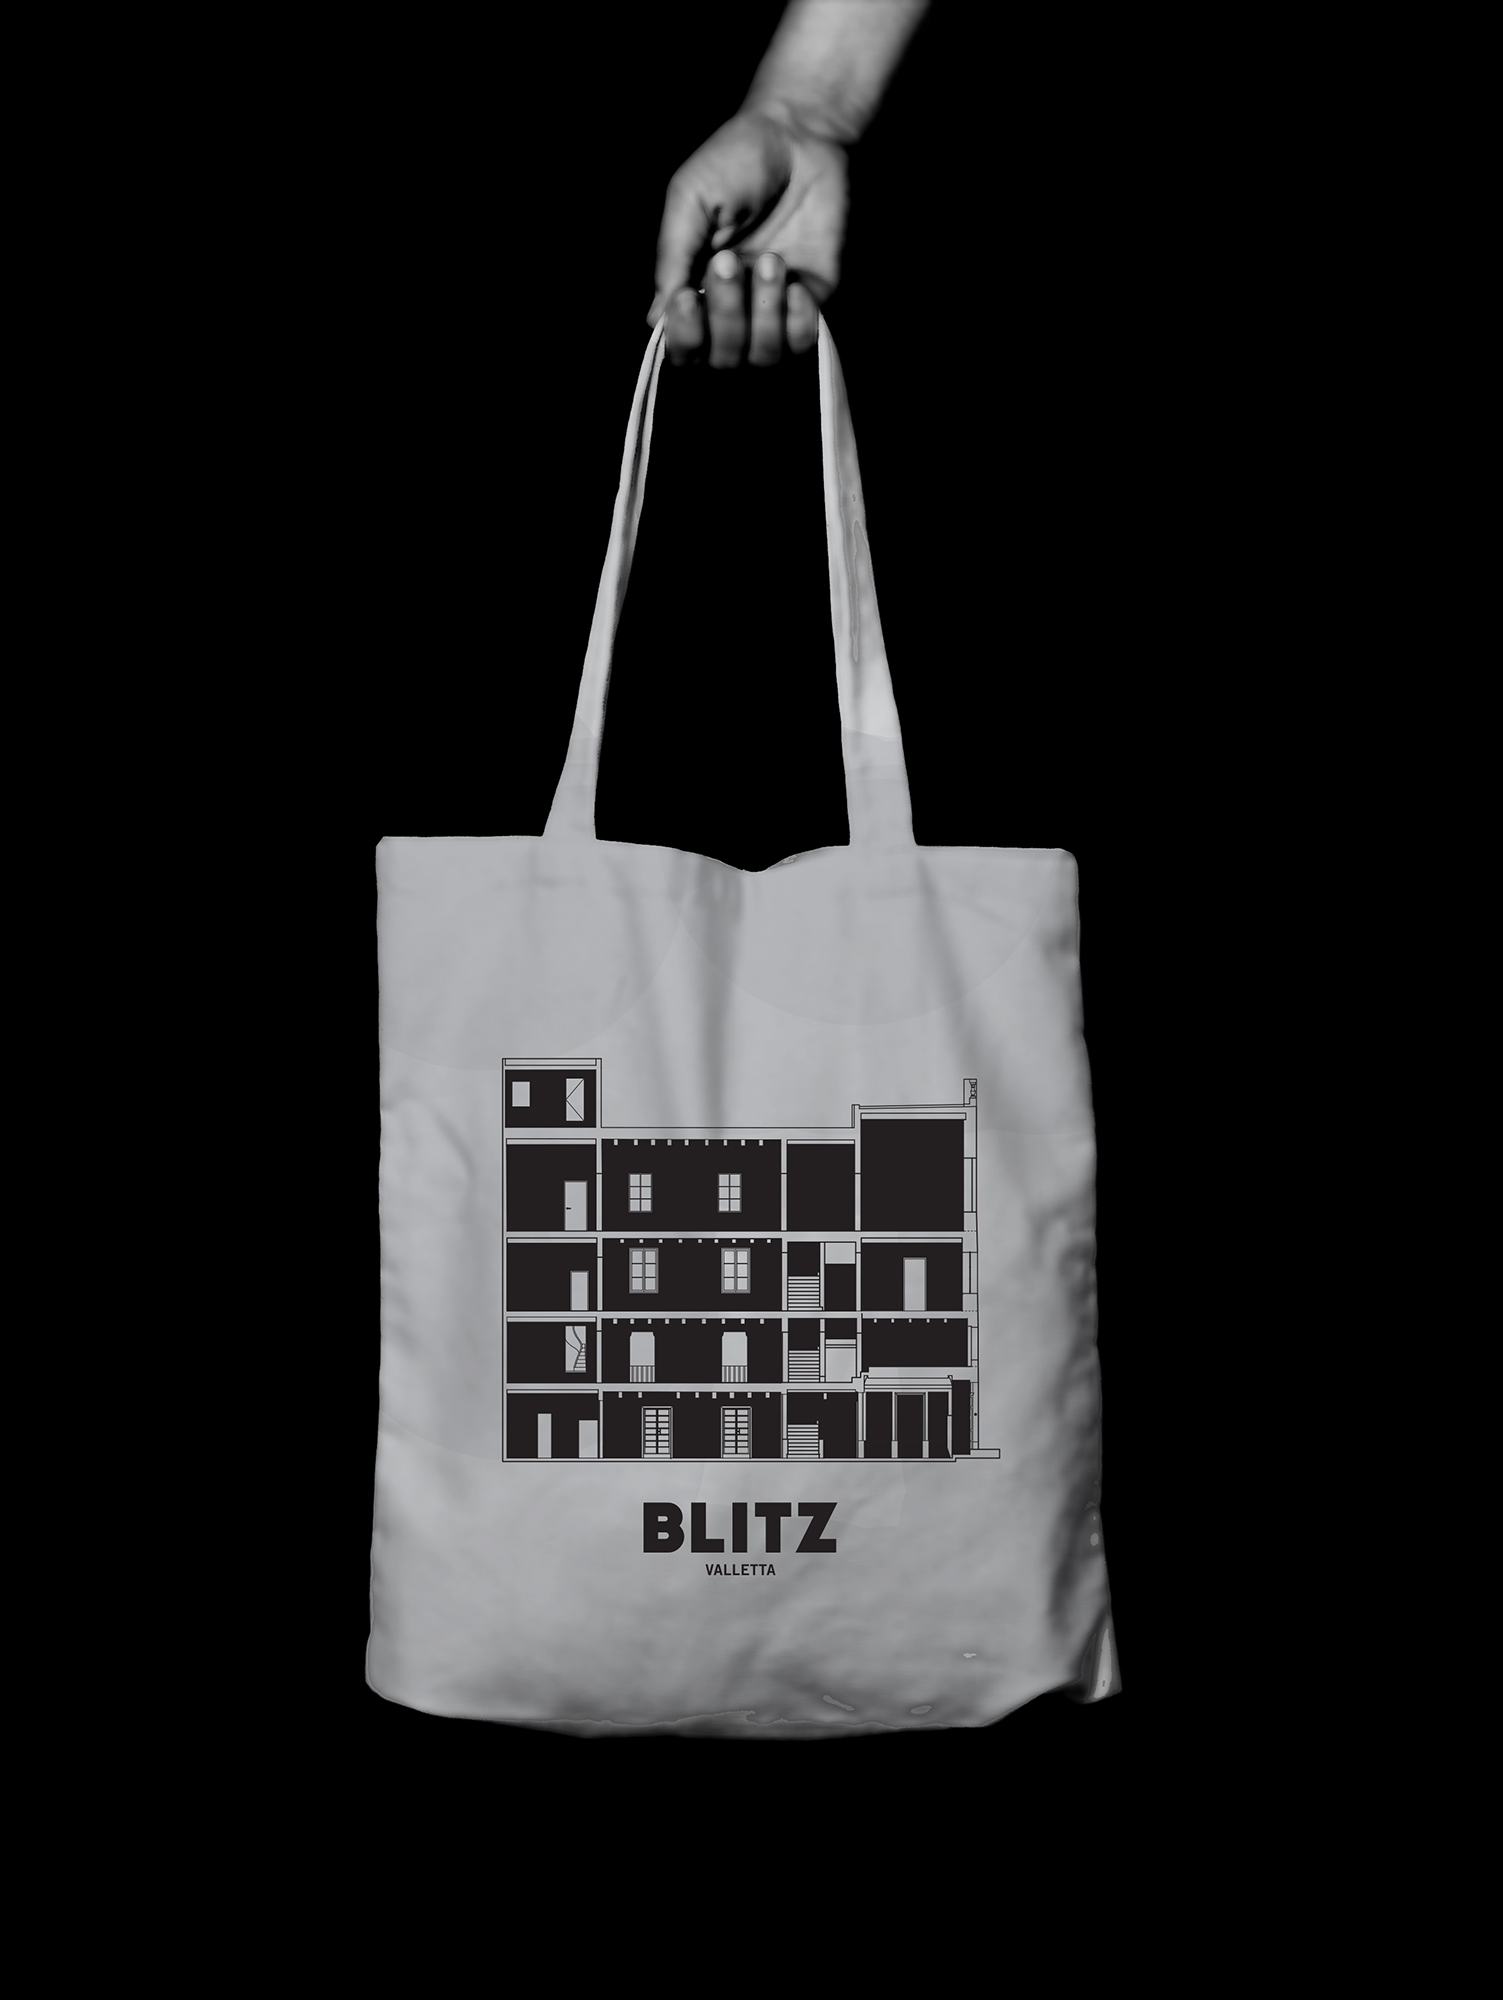 Blitz Valletta tote bag design by Alexandra Pace Studio